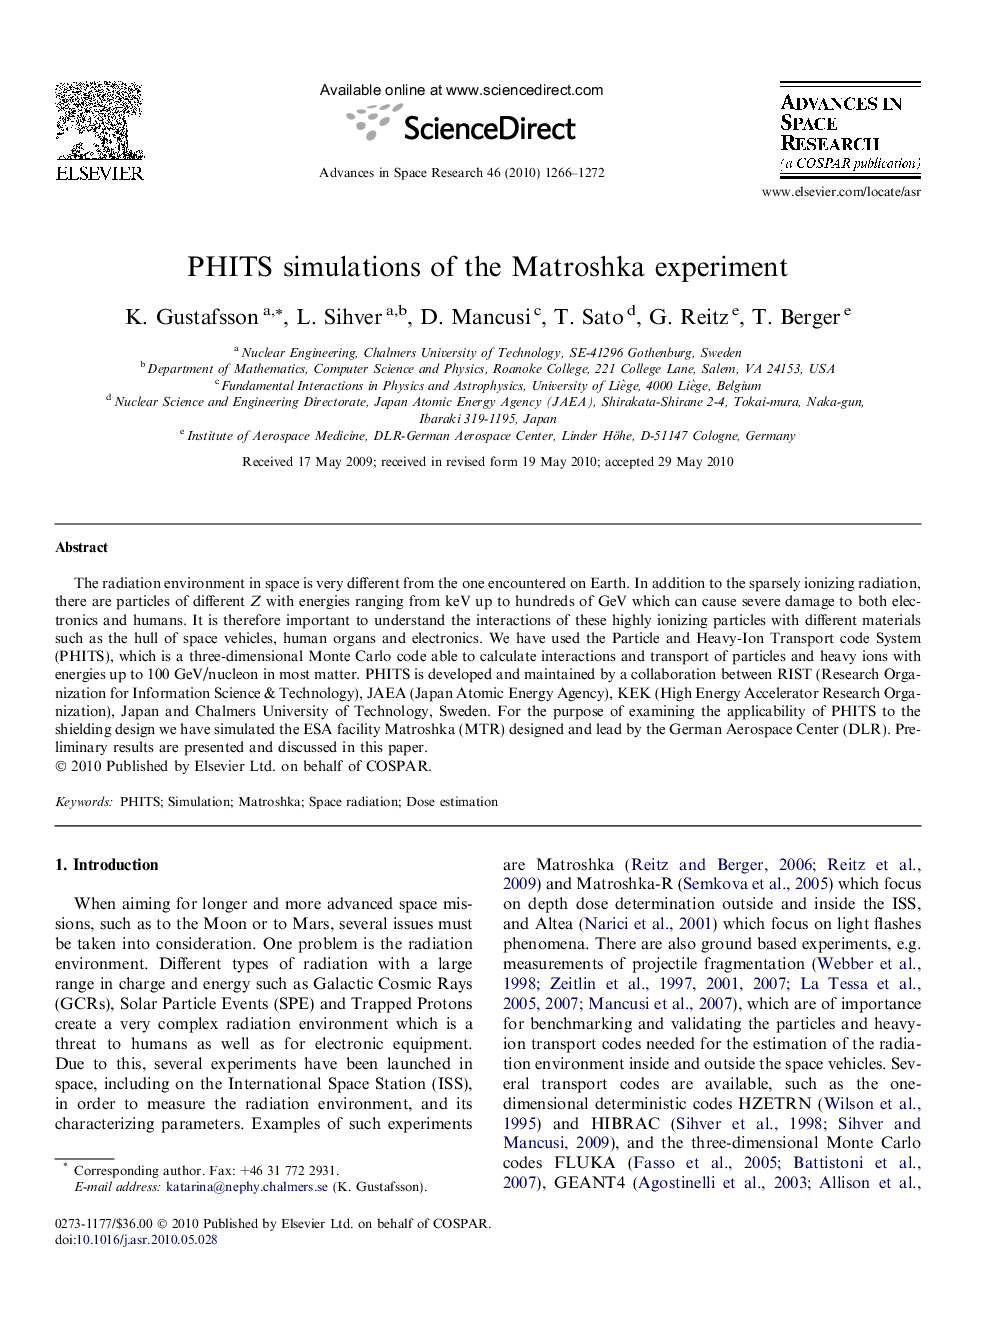 PHITS simulations of the Matroshka experiment